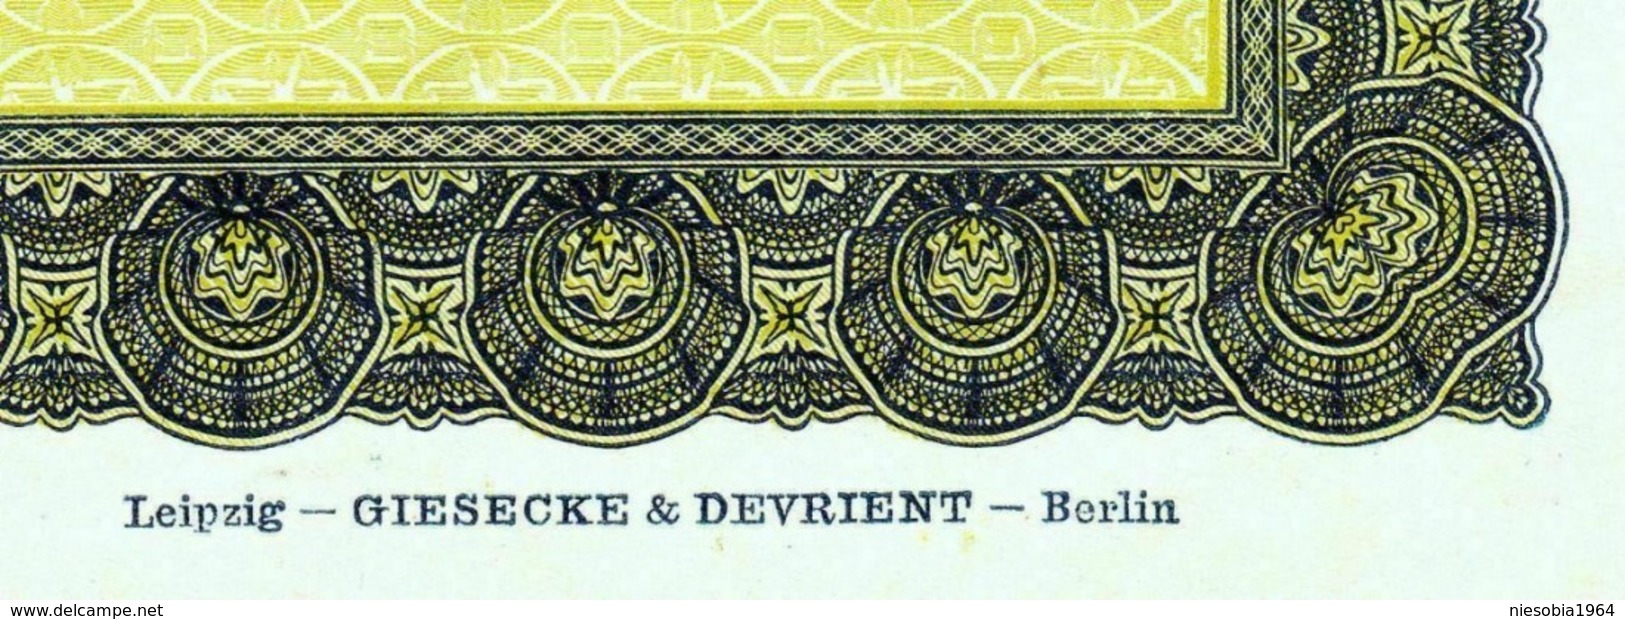 8% Hypothekenpfandbrief 1000 Gold Mark - Berlin 1924 - Weimar Republic Nr 0322 - Vintage Germany stock bond